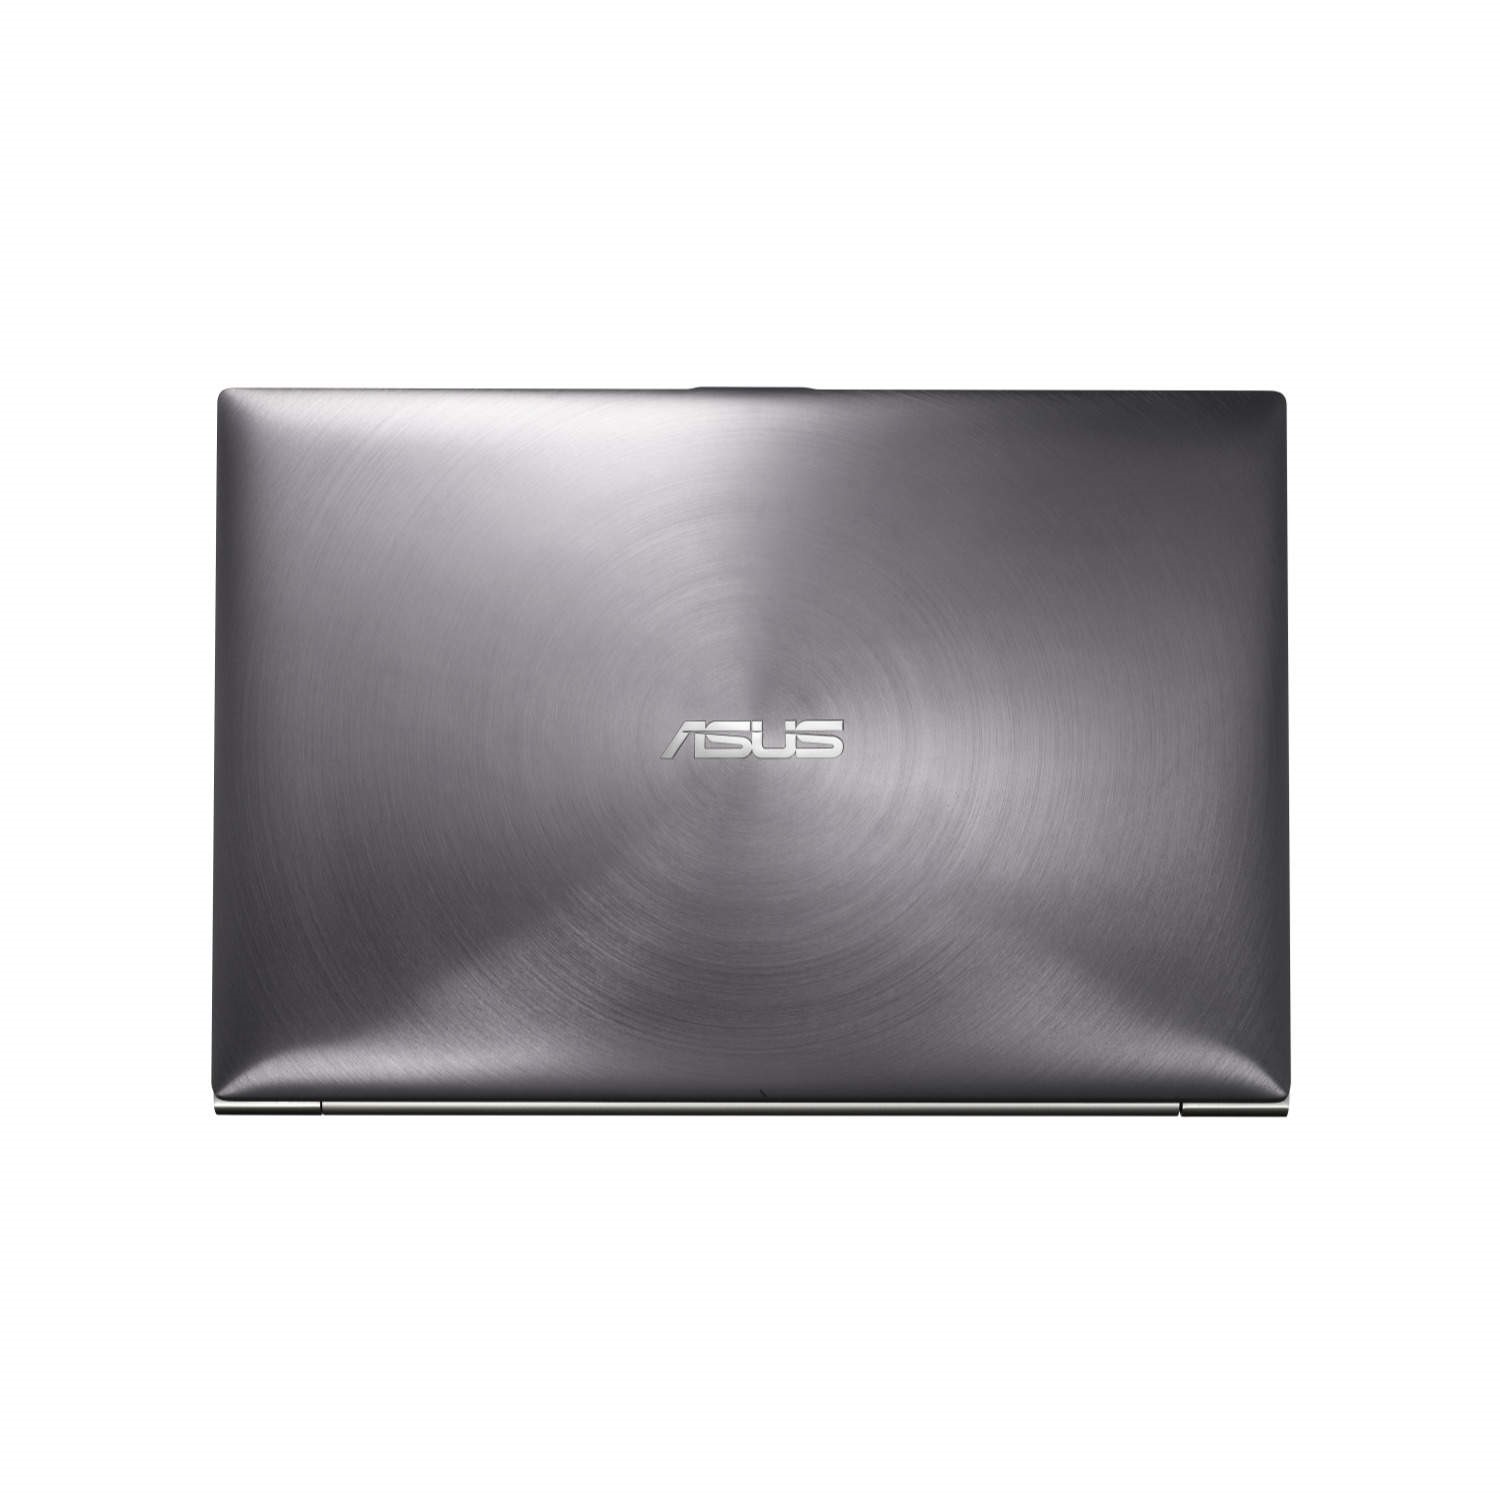 Refurbished Grade A1 Asus ZENBOOK UX31A Core i5 4GB 128GB SSD 13.3 inch  Windows 8 Ultrabook